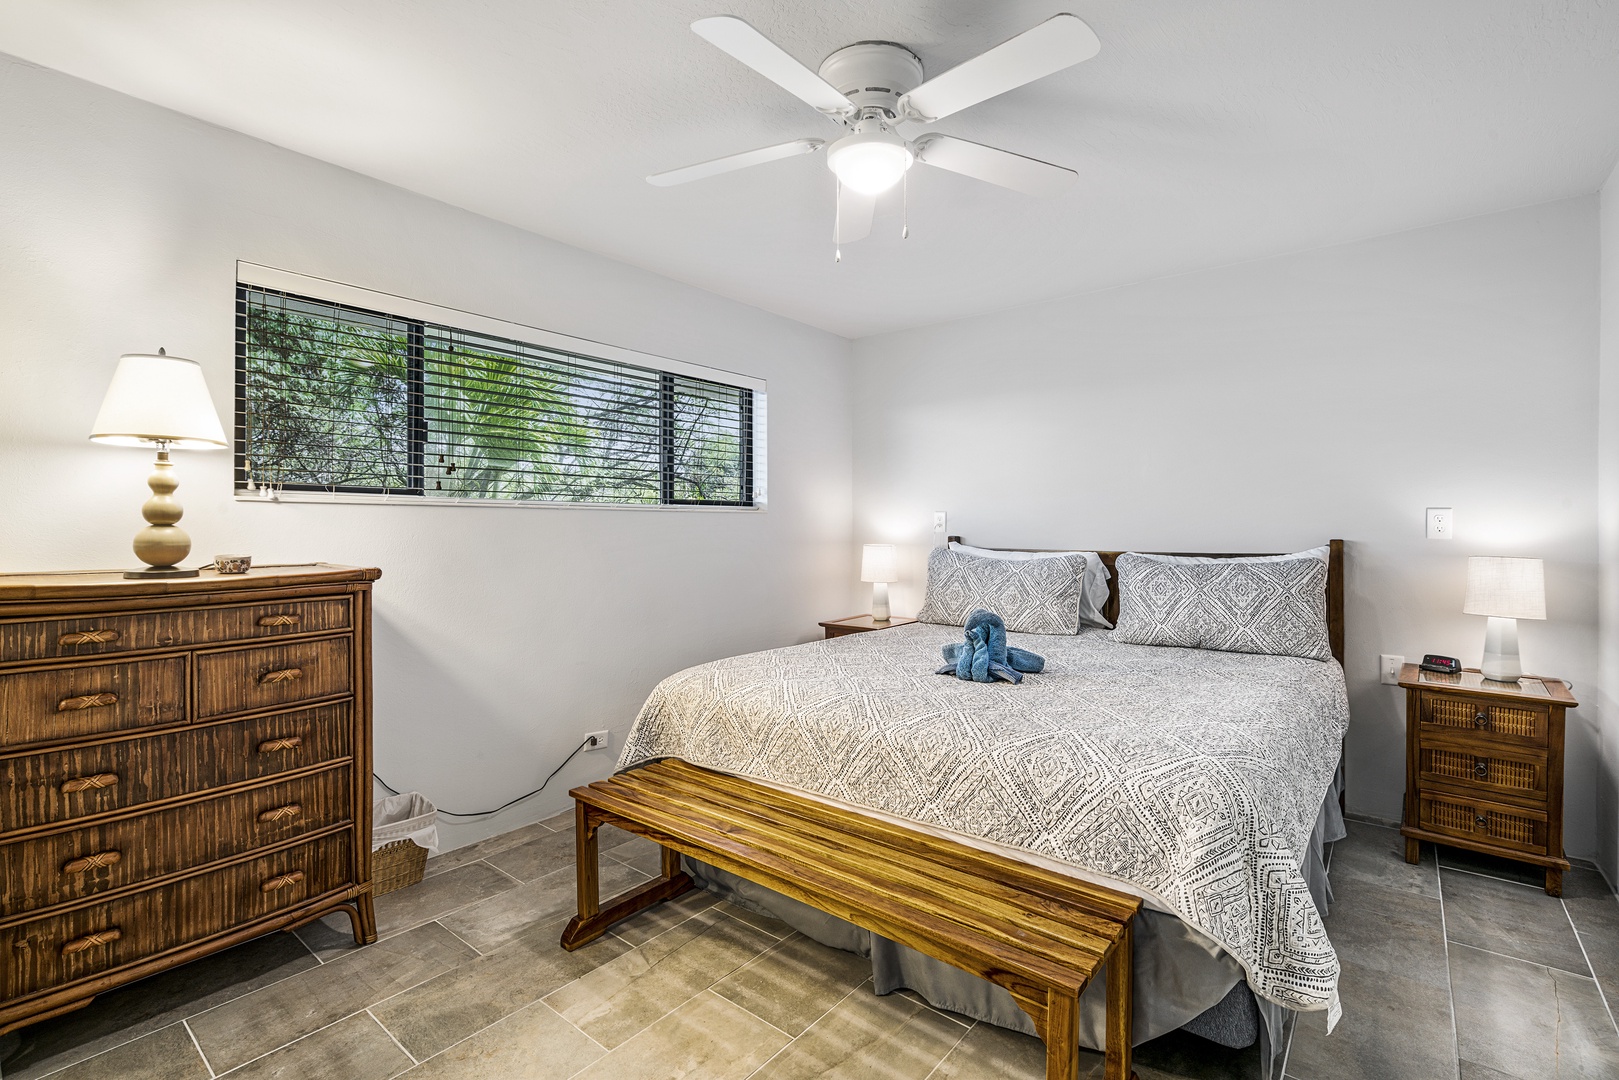 Kailua Kona Vacation Rentals, Casa De Emdeko 235 - Large air conditioned bedroom with King bed!